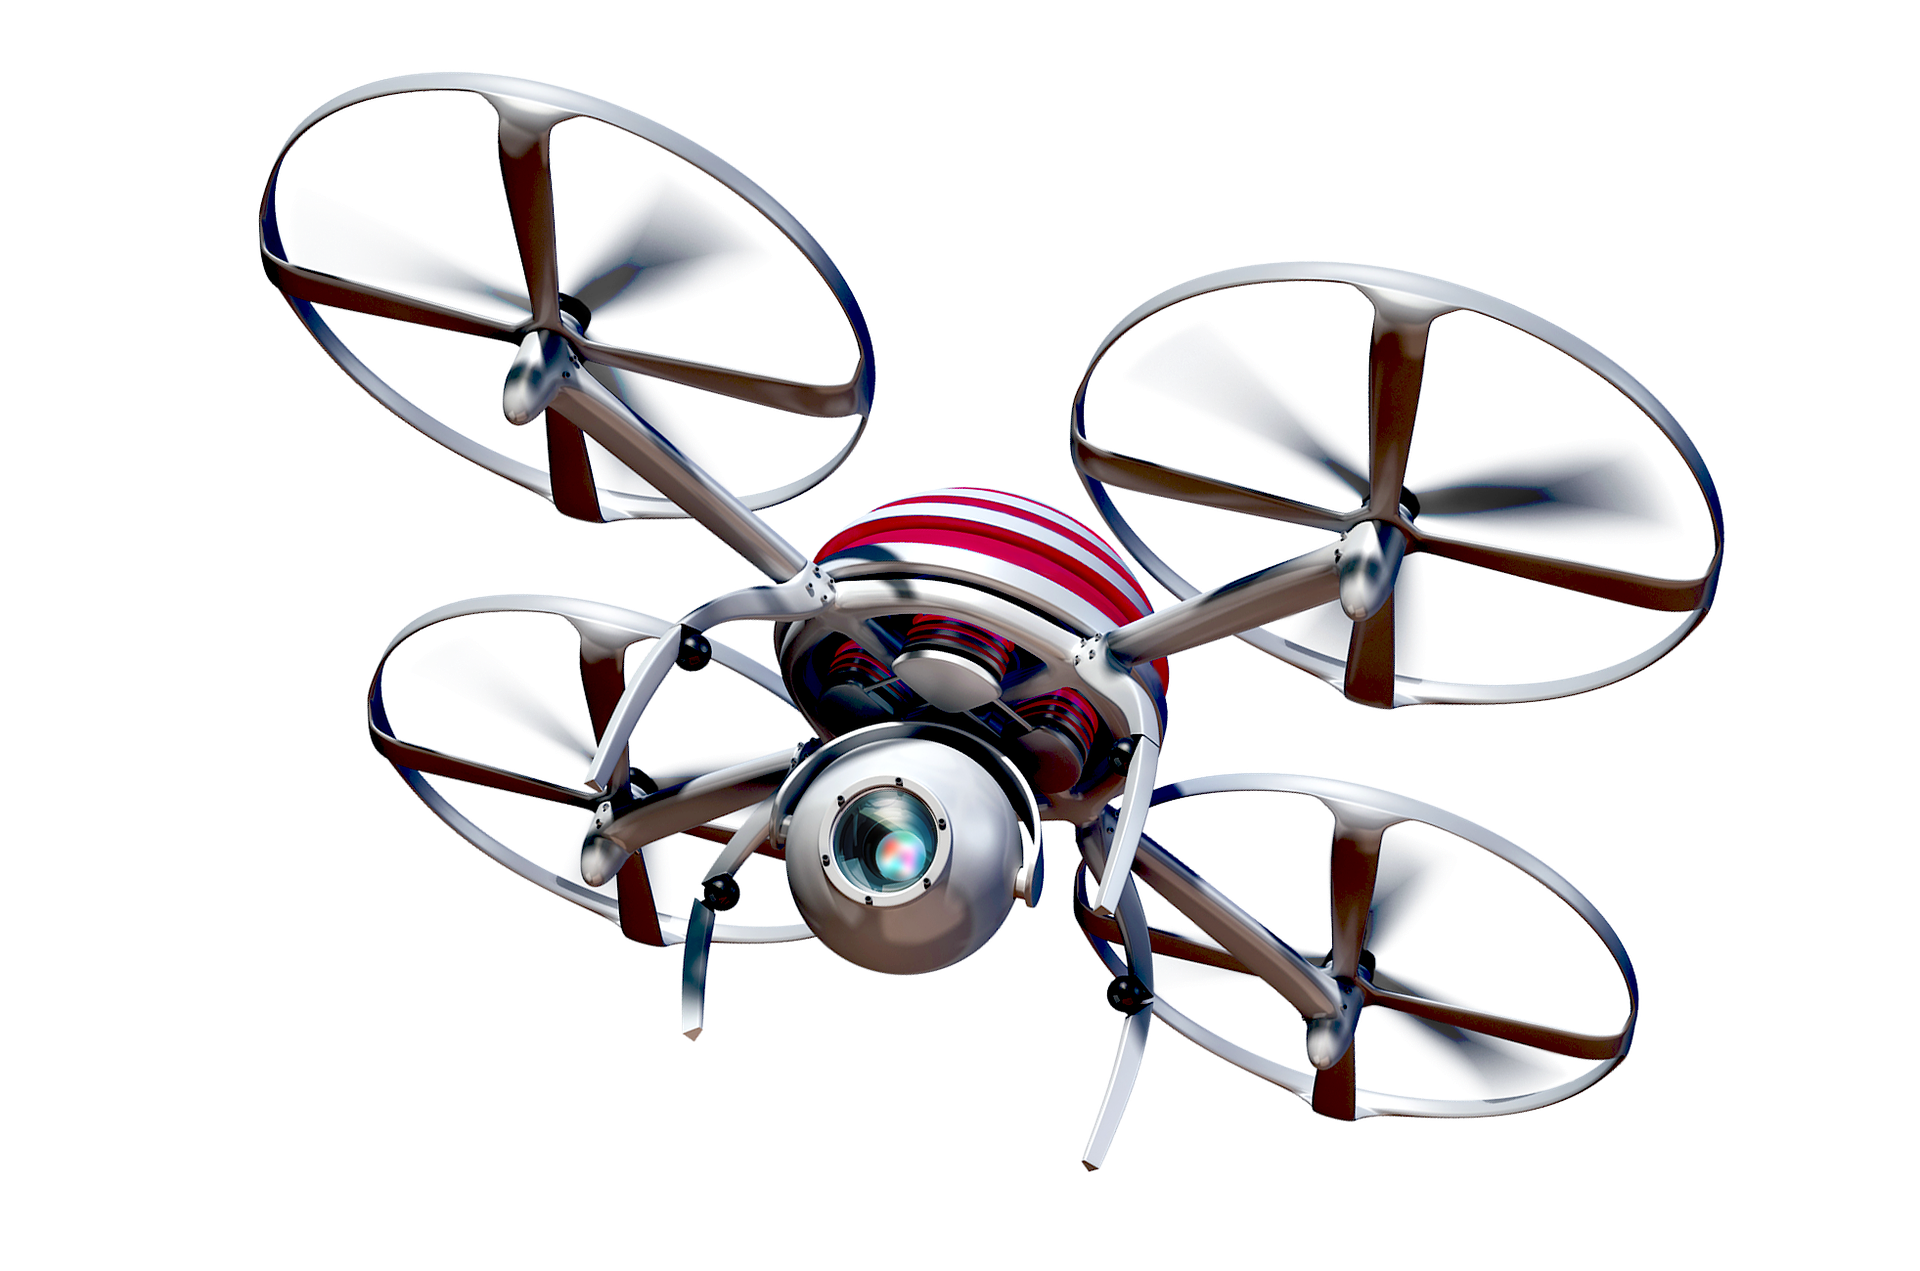 enderun-tekno-quadrocopter